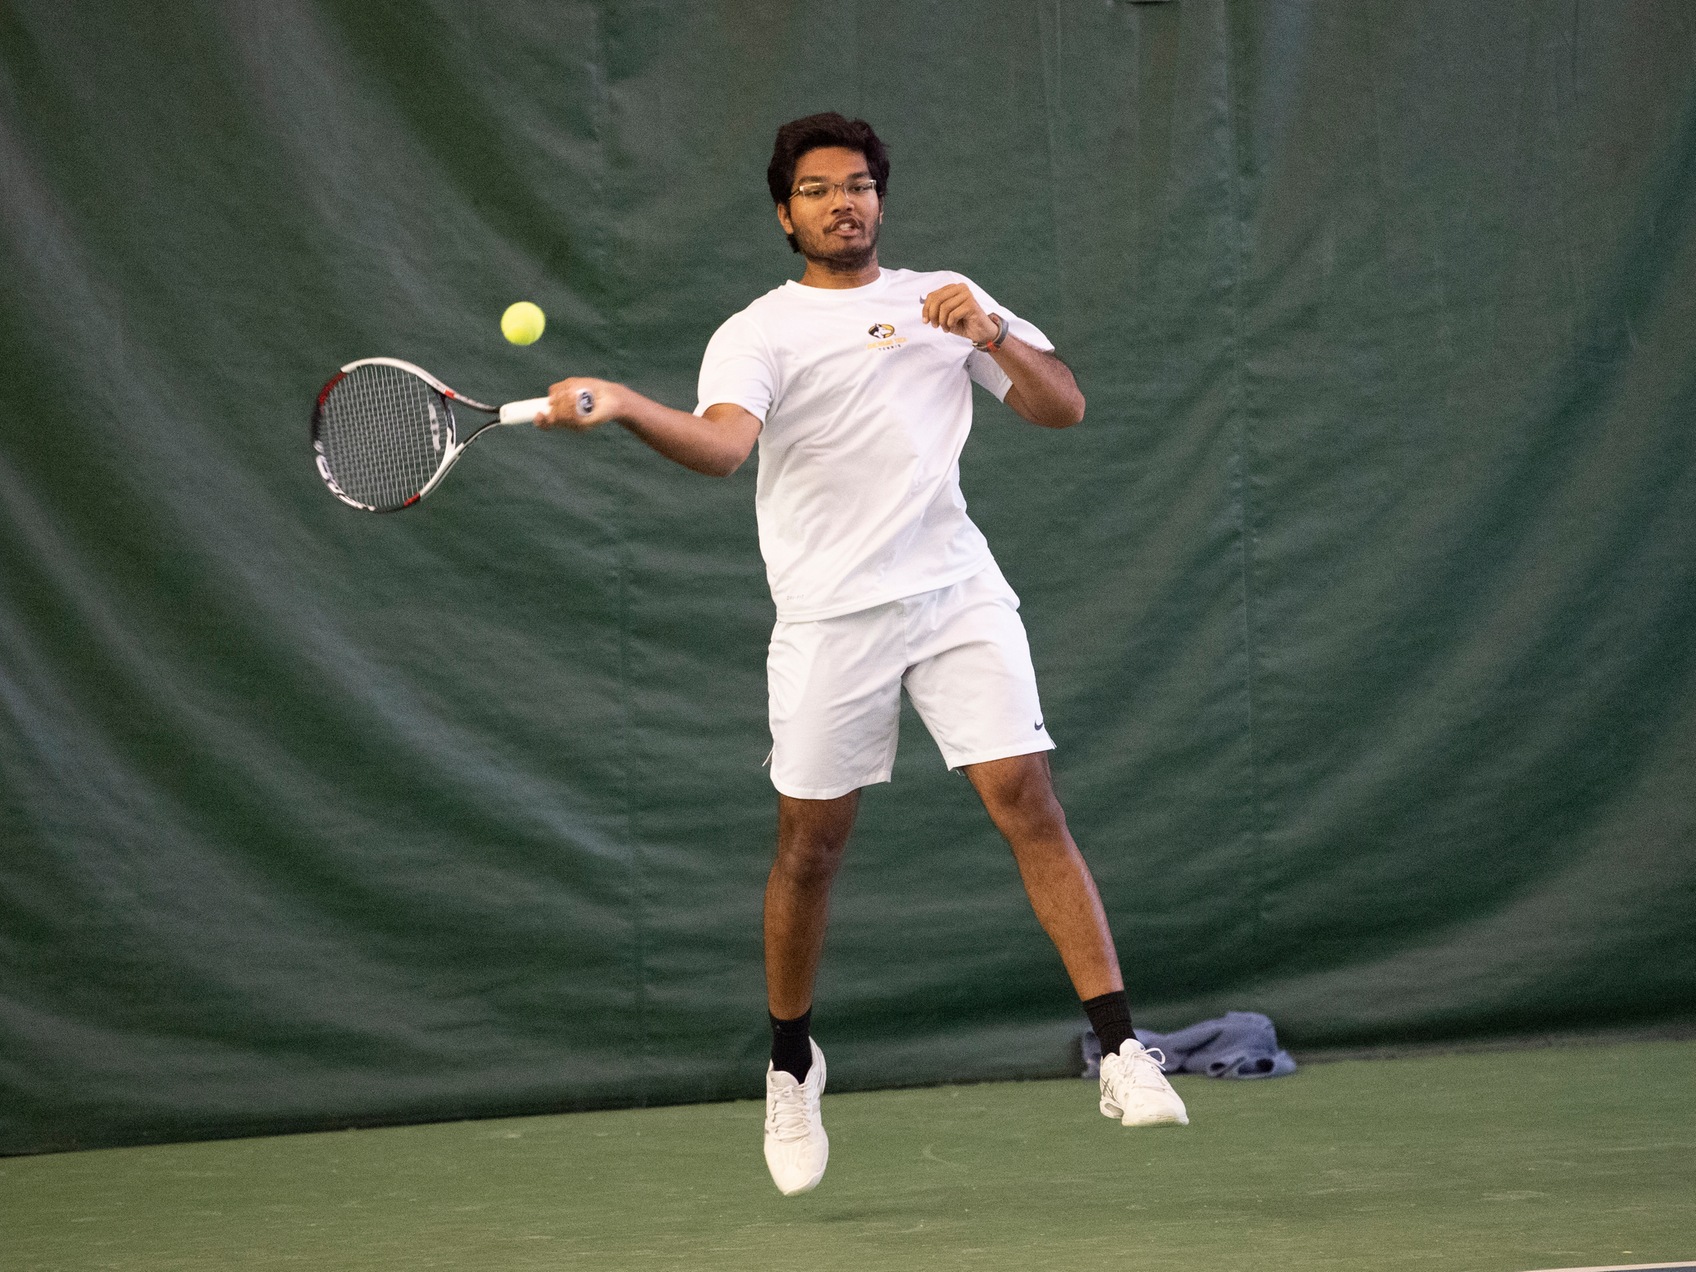 Siddhesh Mahadeshwar swings tennis racket